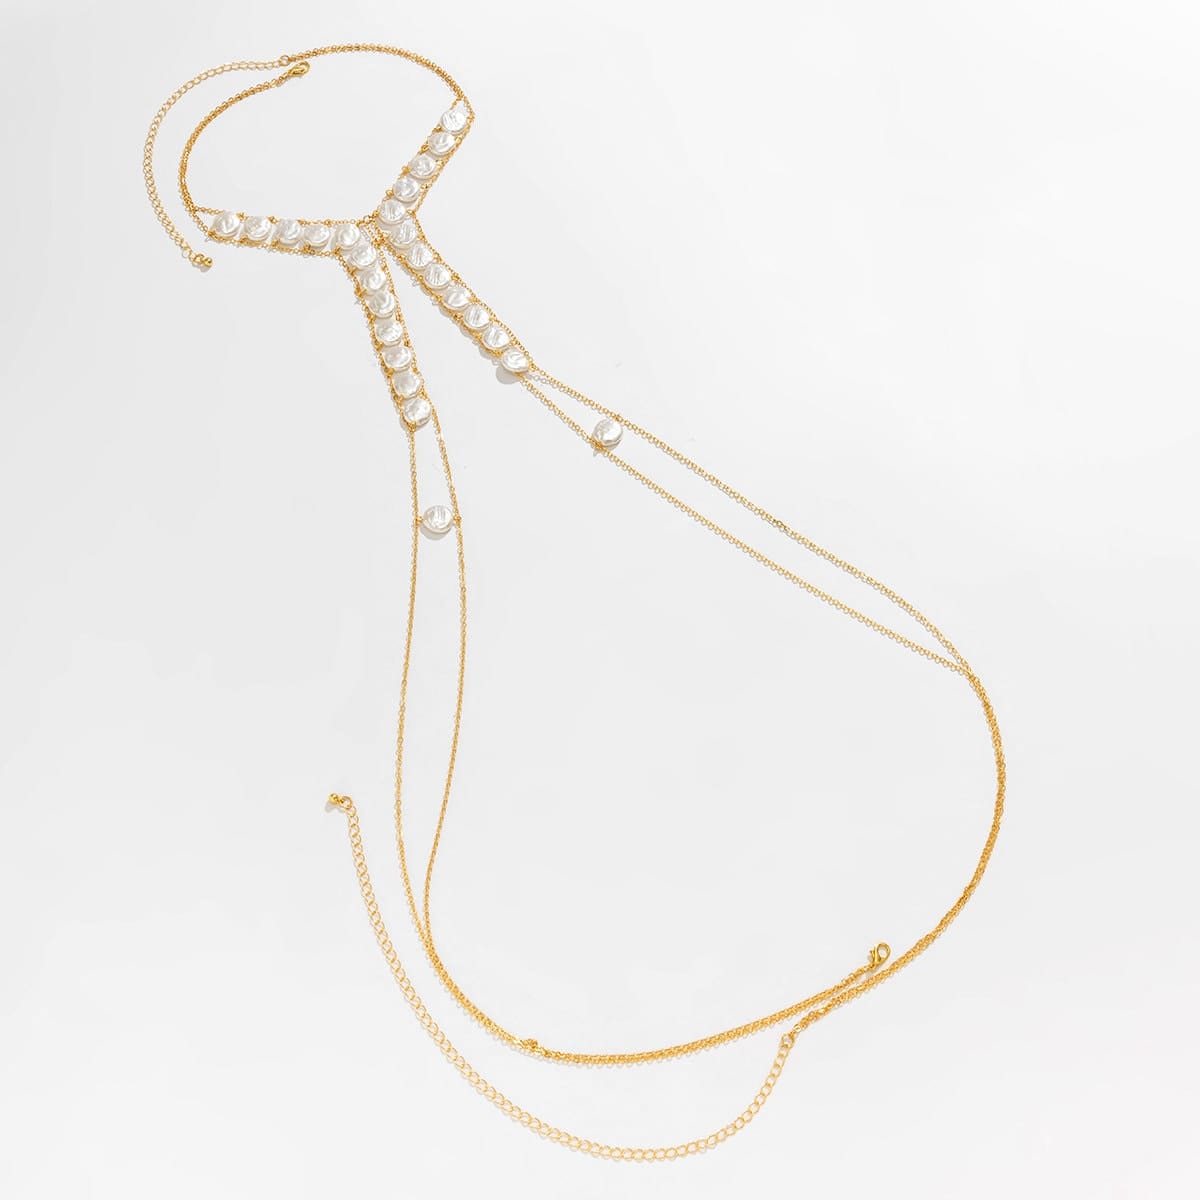 Boho Layered Round Disk Pearl Body Chain Necklace - ArtGalleryZen